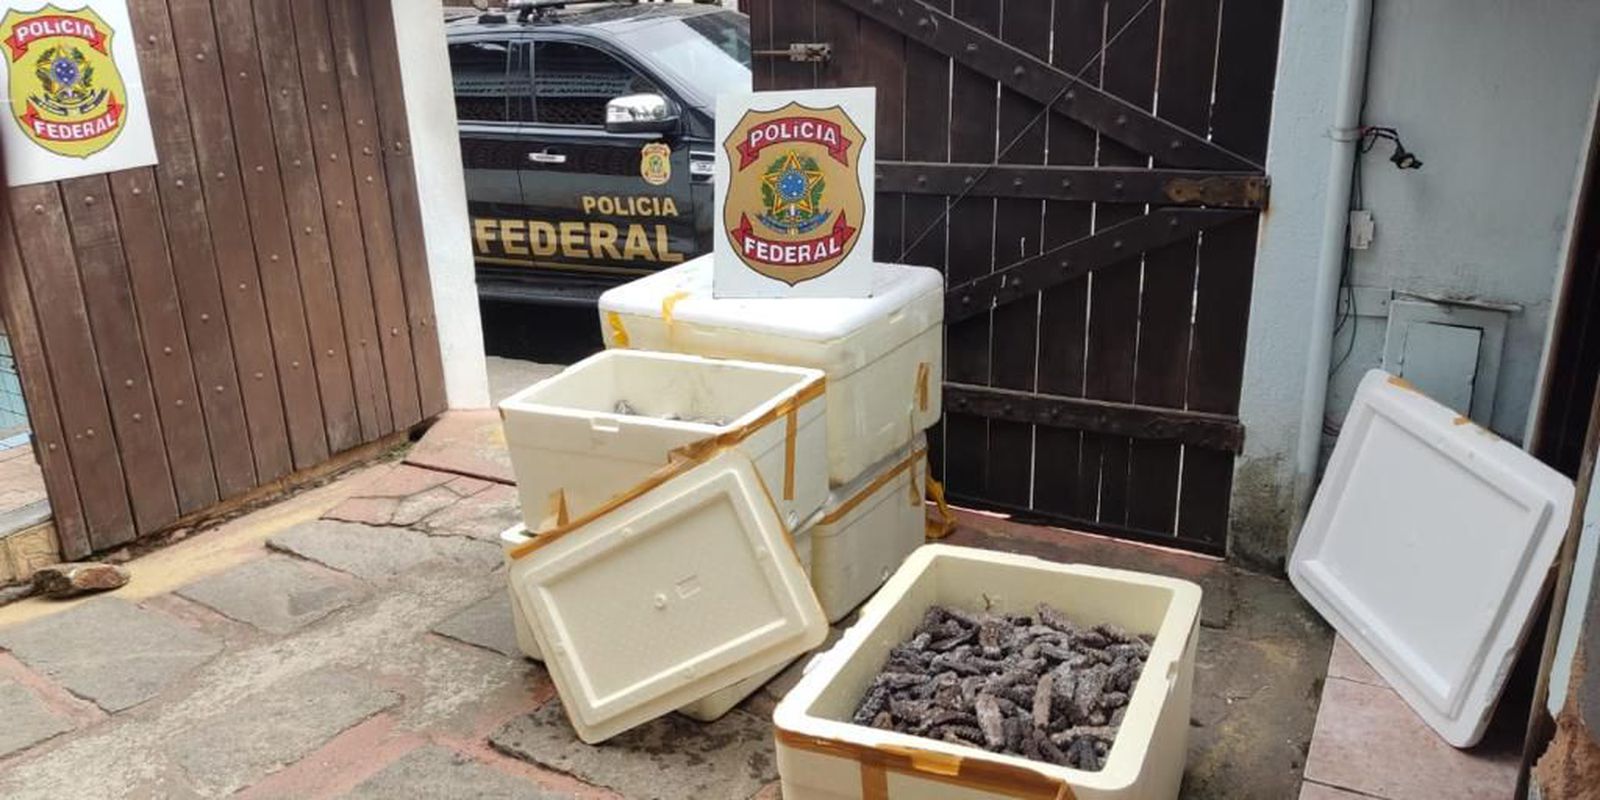 PF seizes 300 kilos of sea cucumbers in Angra dos Reis